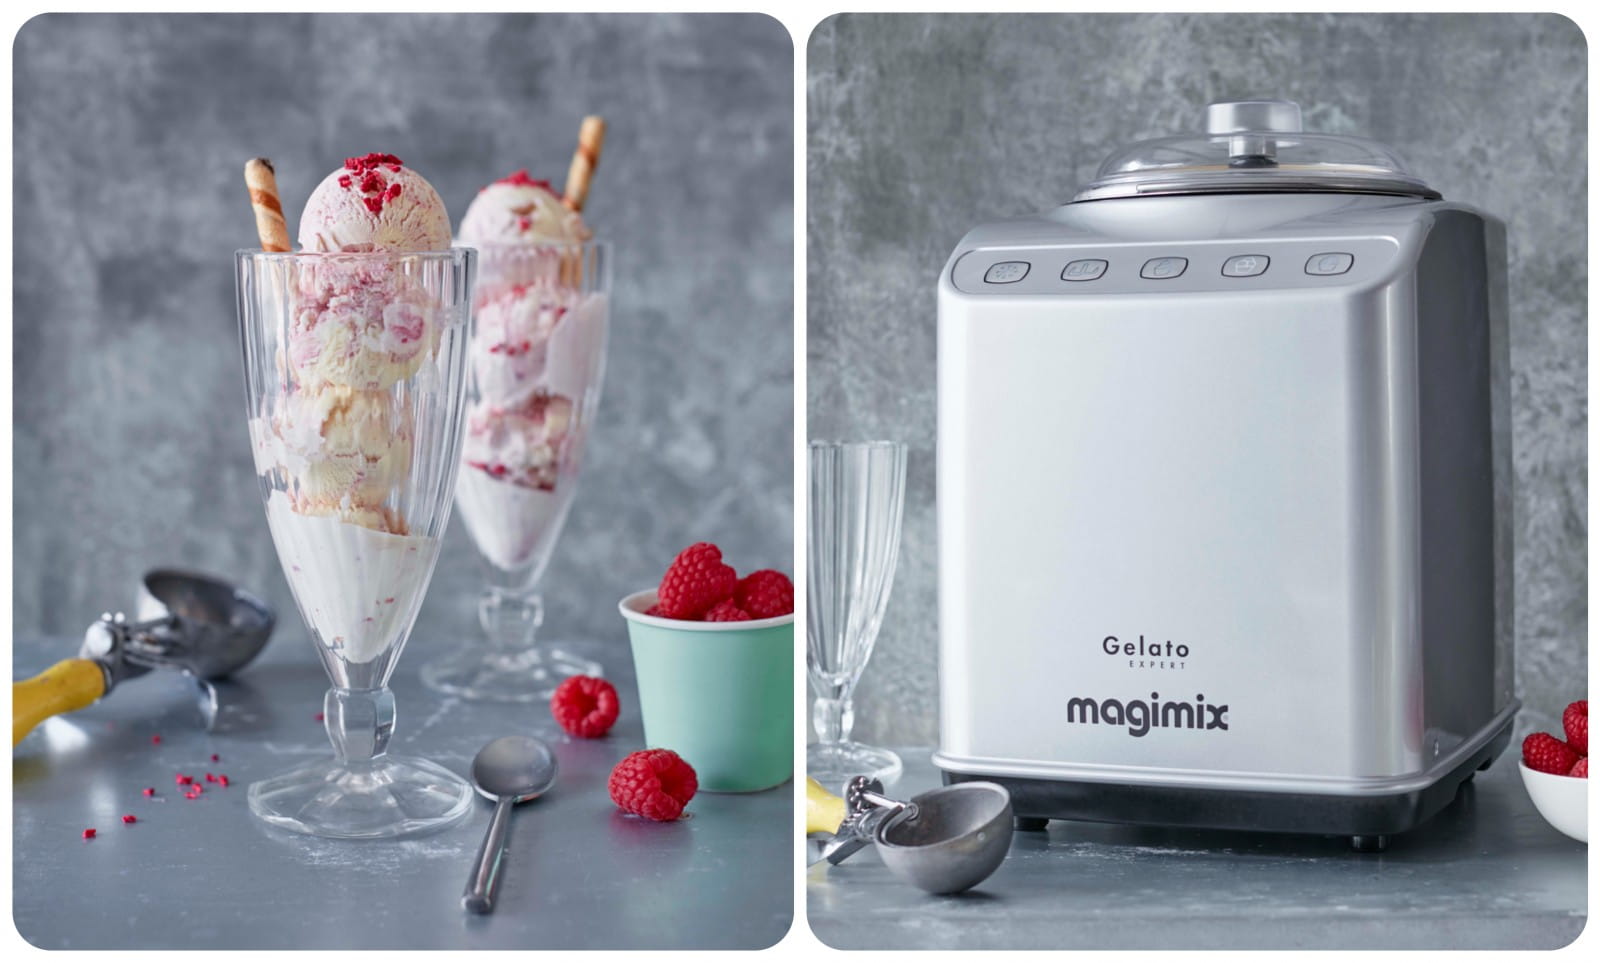 Win a Magimix Gelato Expert ice cream maker